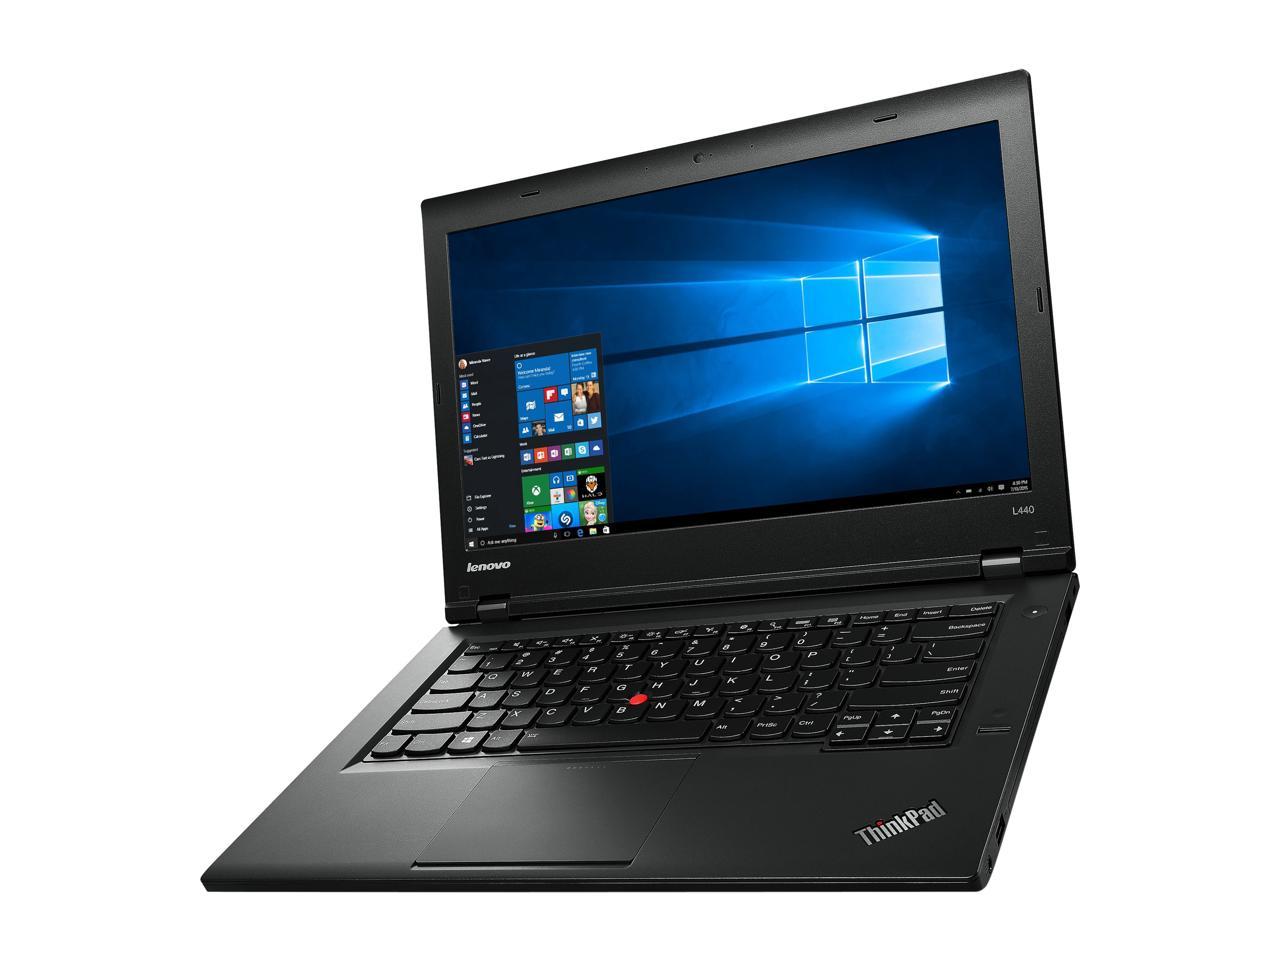 Lenovo Grade A Laptop ThinkPad L440 Intel Core i5 4th Gen 4200M (2.50 GHz) 8 GB Memory 512 GB SSD Intel HD Graphics 4600 14.0" Windows 10 Pro 64-bit